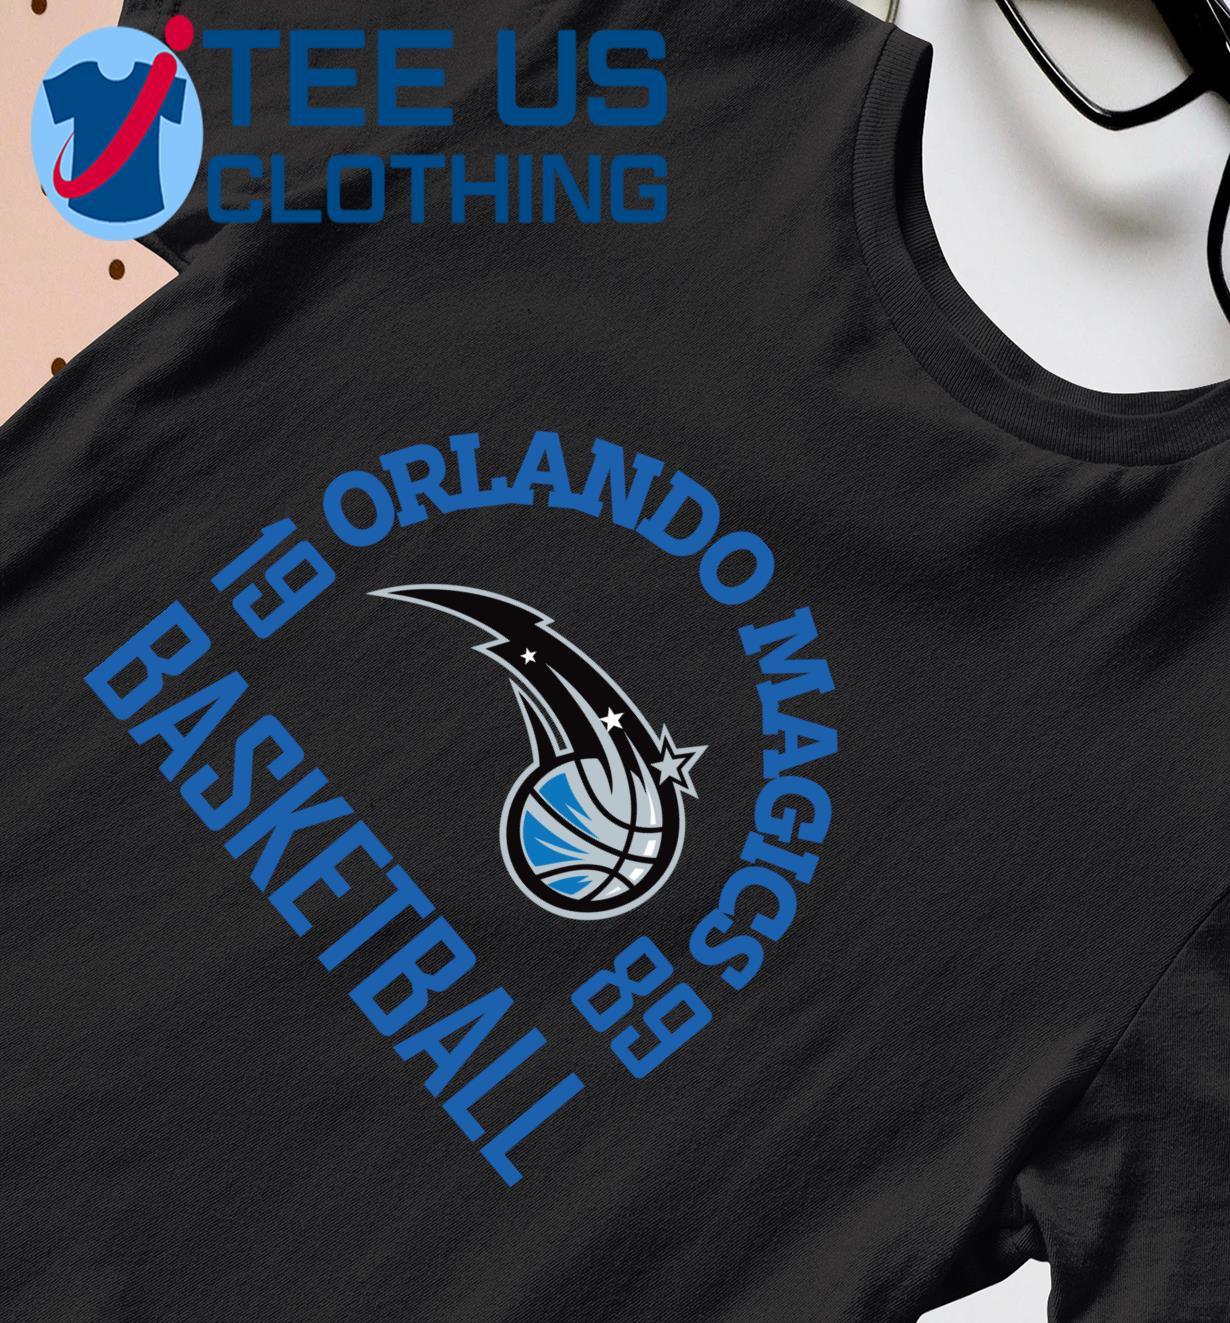 Orlando Magics Basketball 1989 shirt